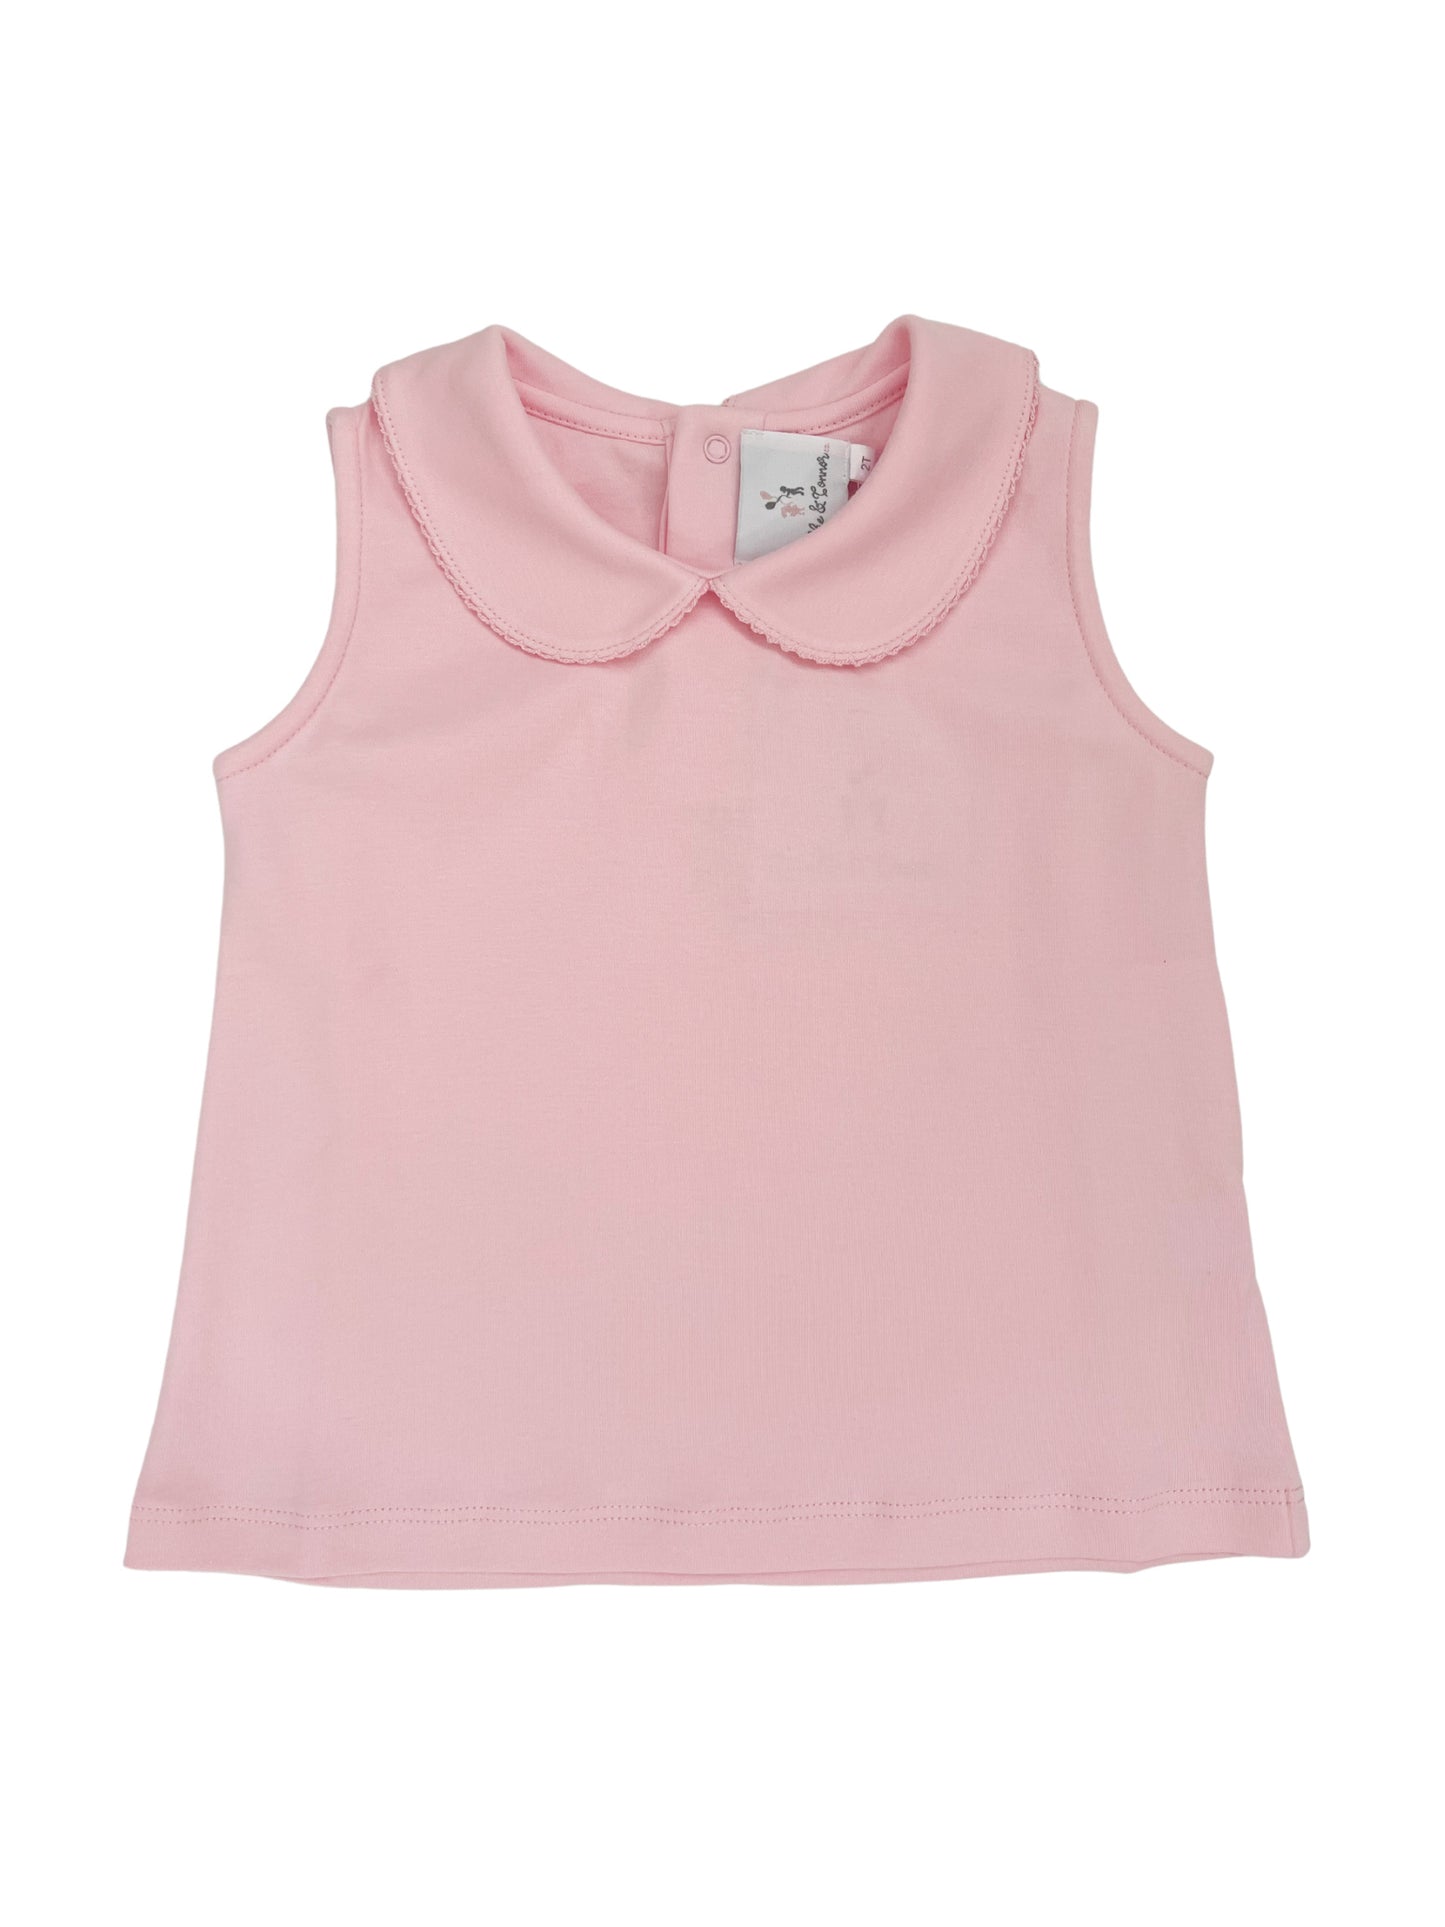 Piper pink Pima shirt